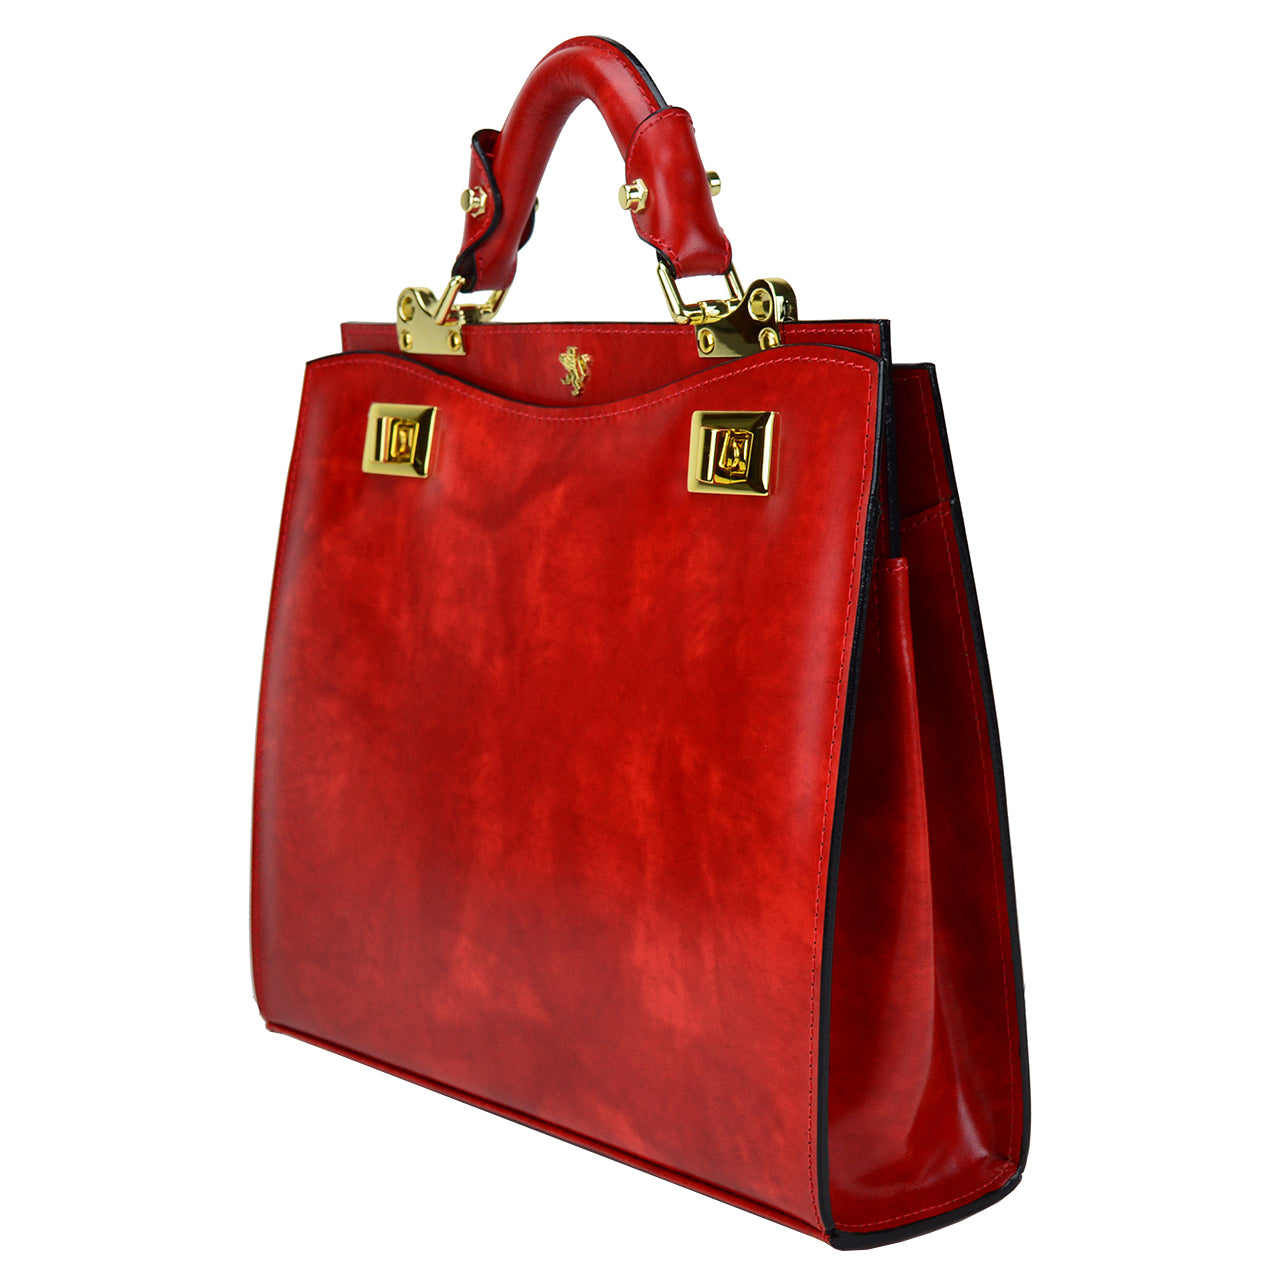 Pratesi Anna Maria Luisa de' Medici Medium Lady Bag in genuine Italian leather - Brunelleschi Leather Chianti